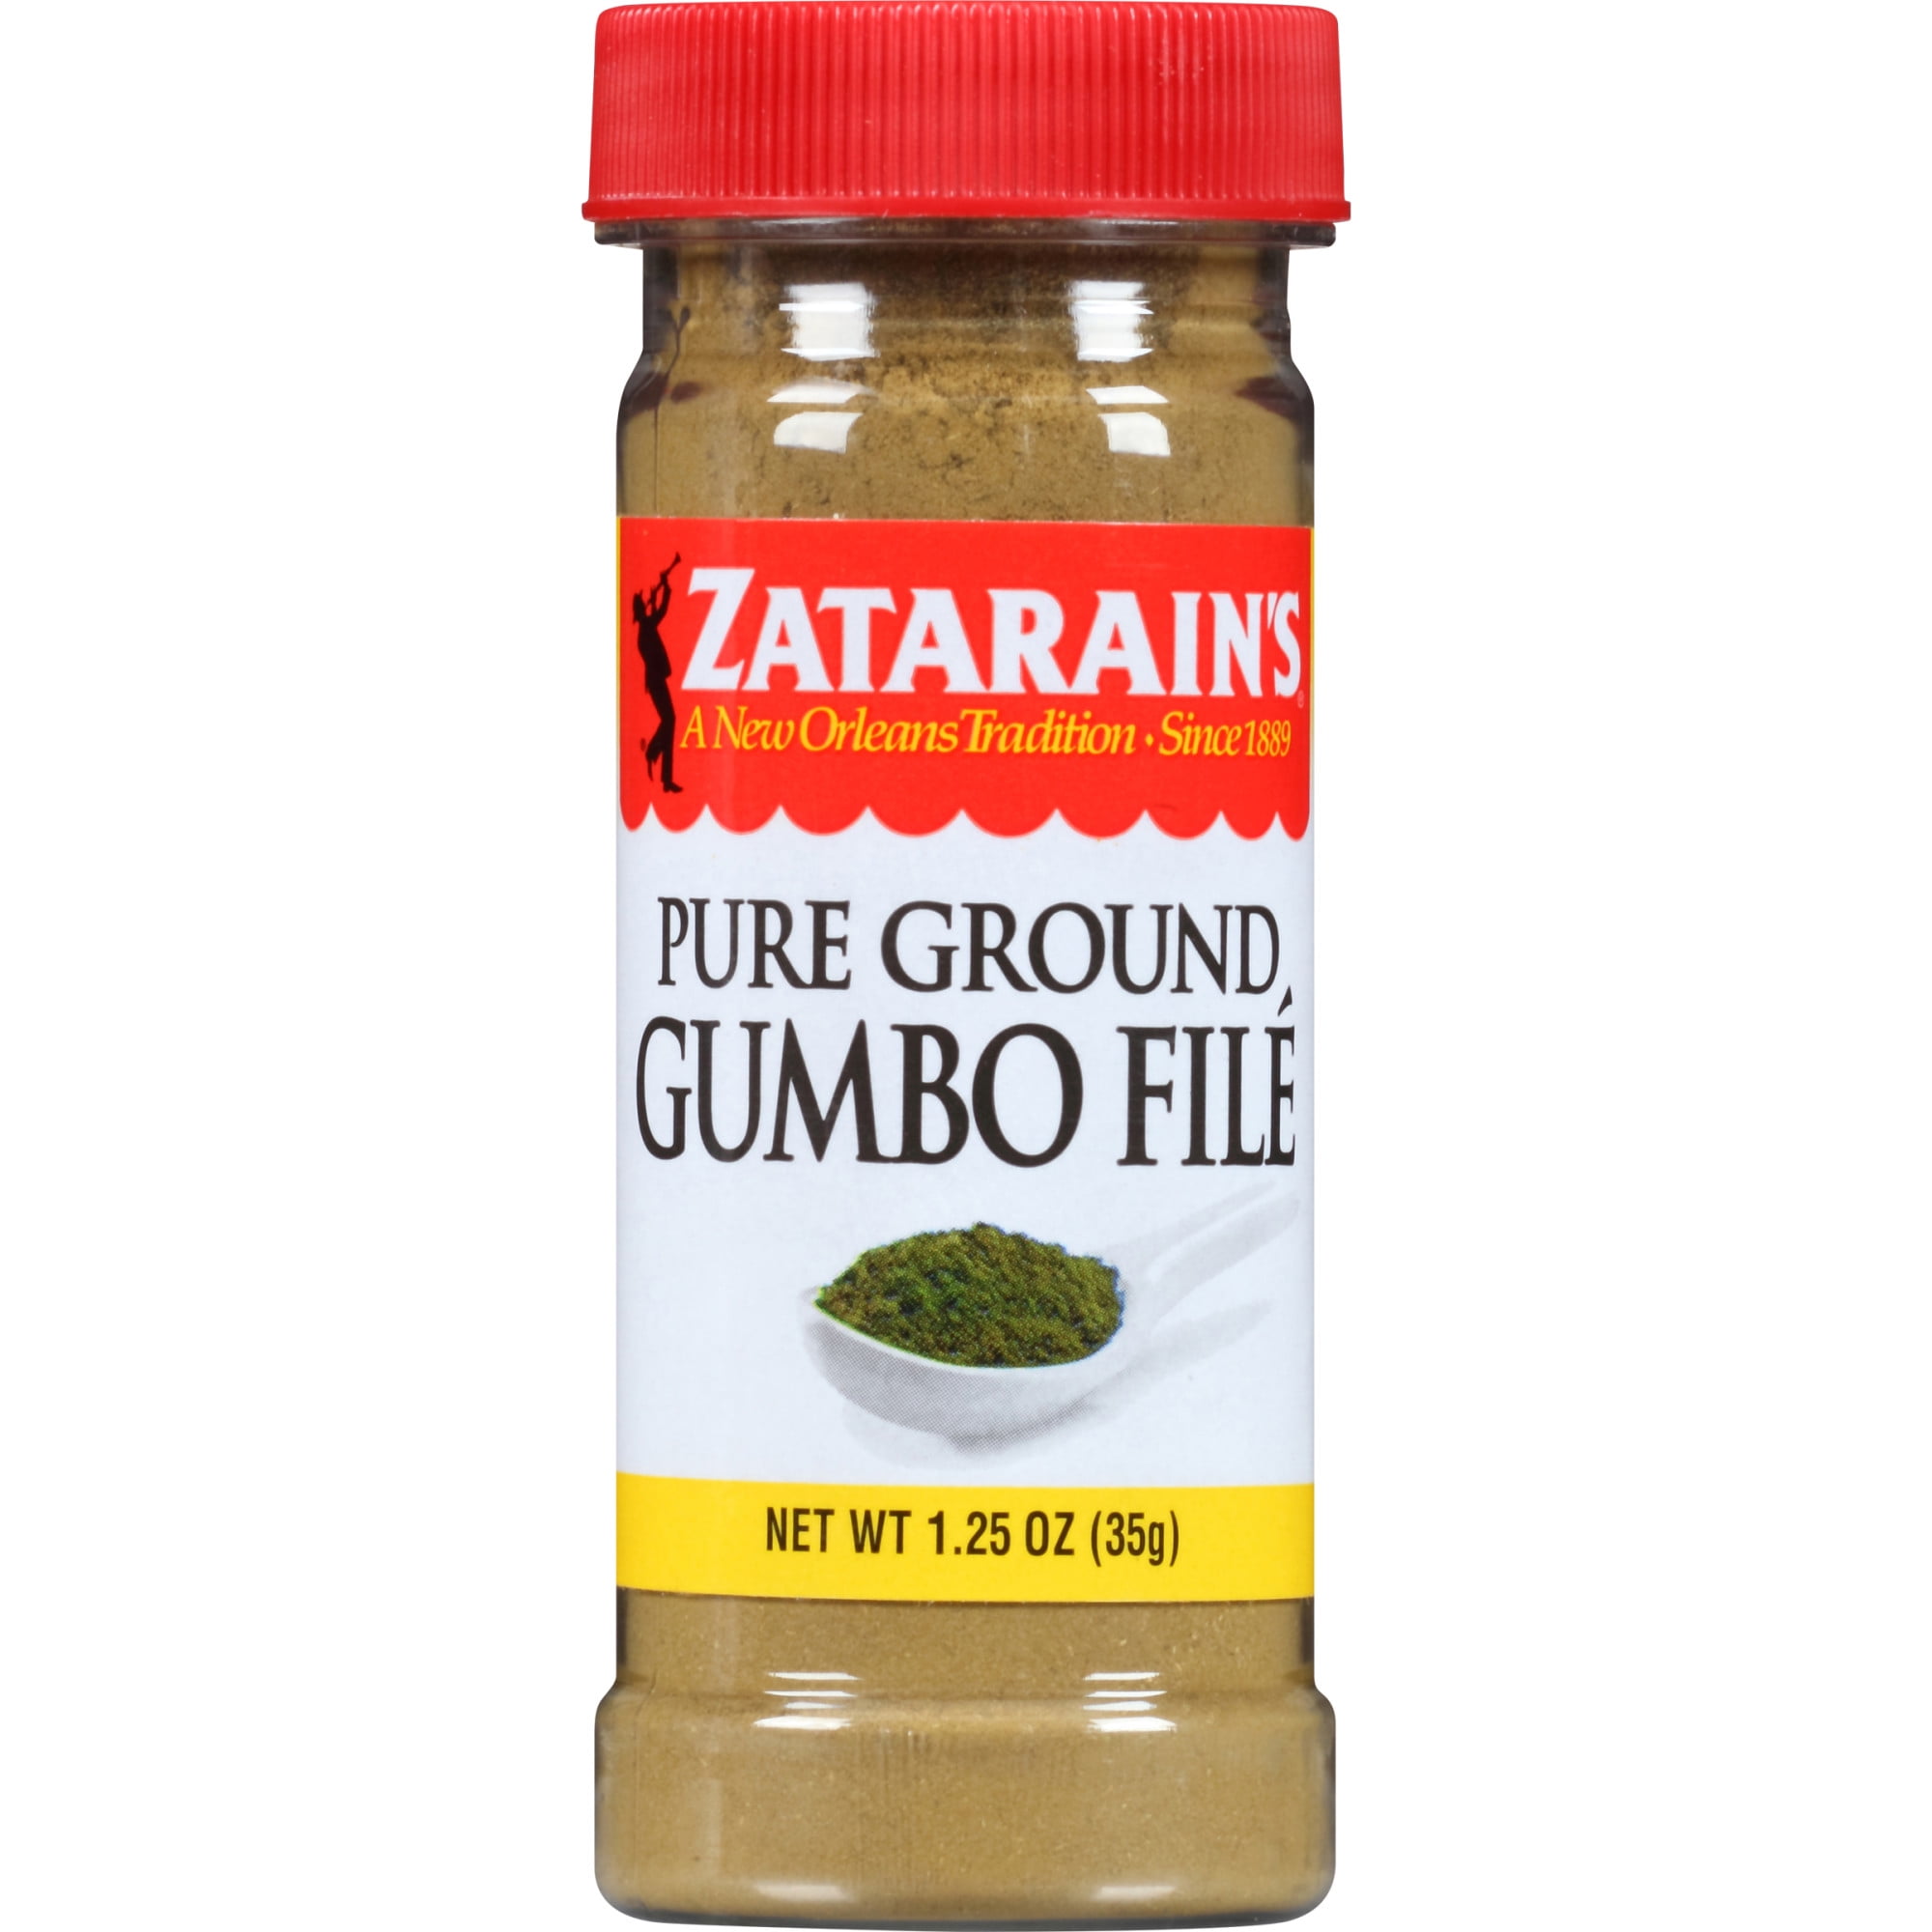 Zatarains Pure Ground Gumbo File 1.25 oz